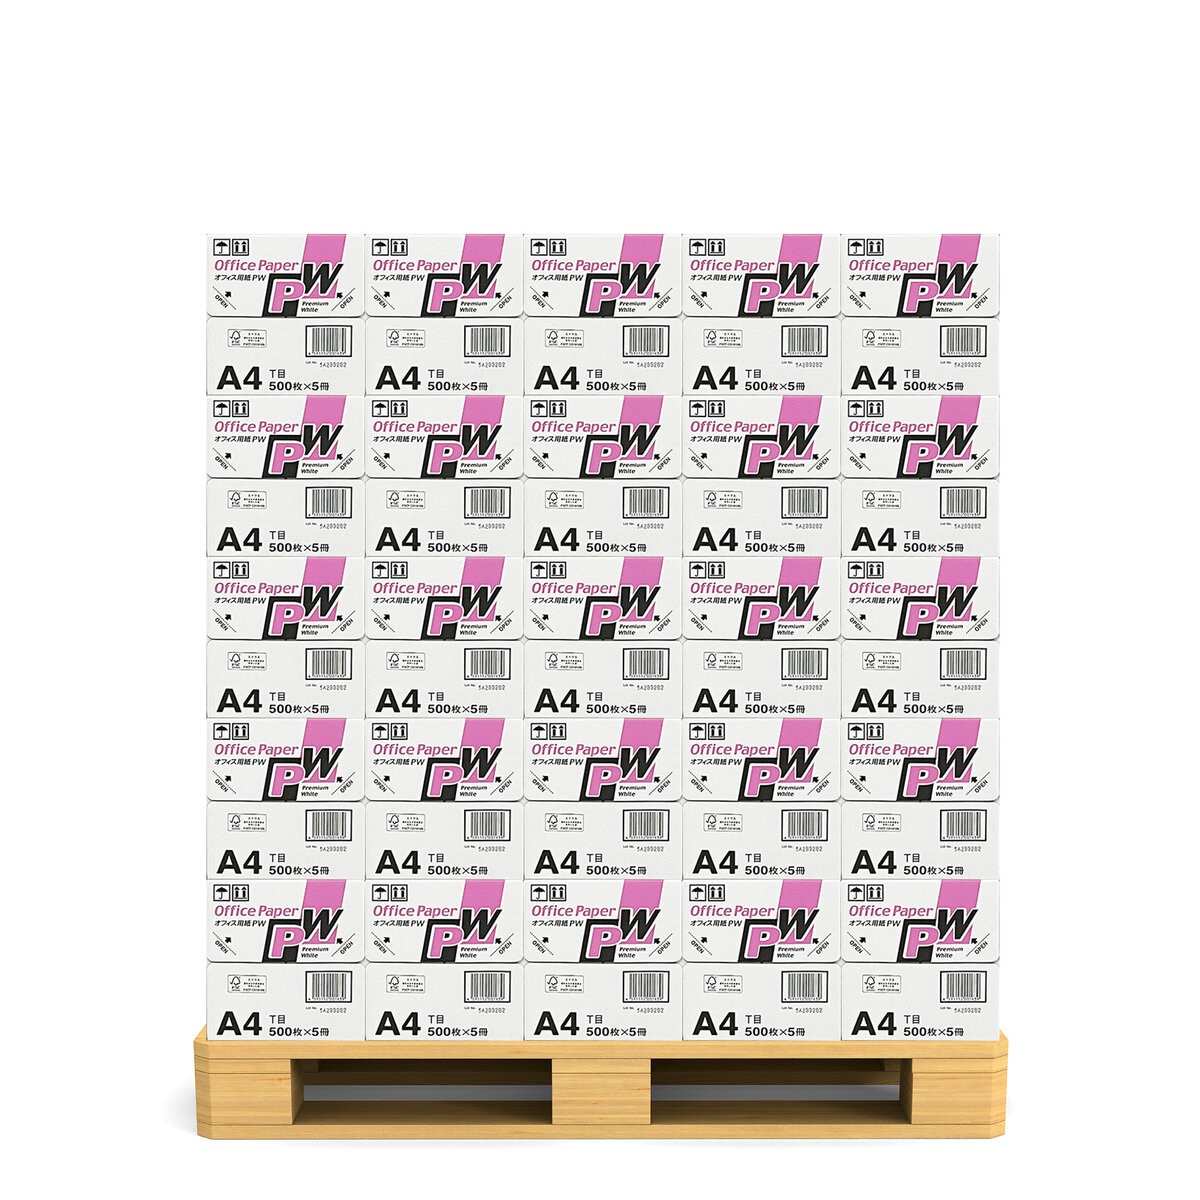 A4 コピー用紙 500枚 X 5 冊パック入り 1パレット (75箱) | Costco Japan